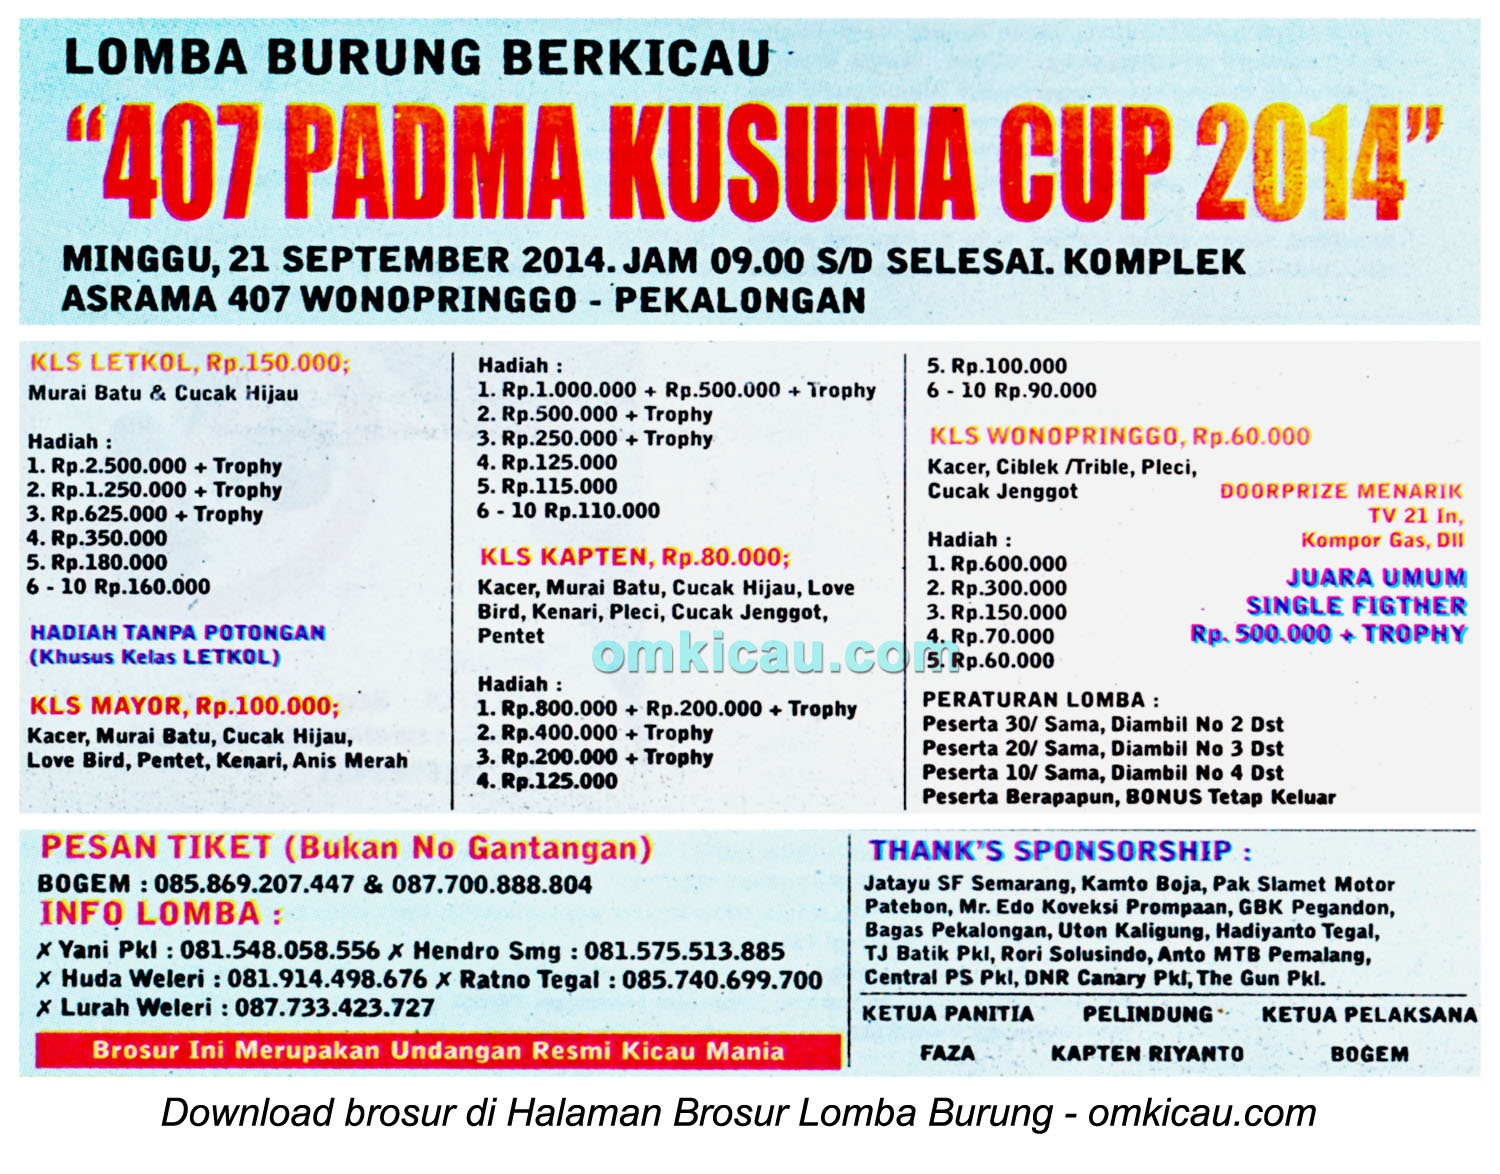 Brosur Lomba Burung Berkicau 407 Padma Kusuma Cup, Pekalongan, 21 September 2014